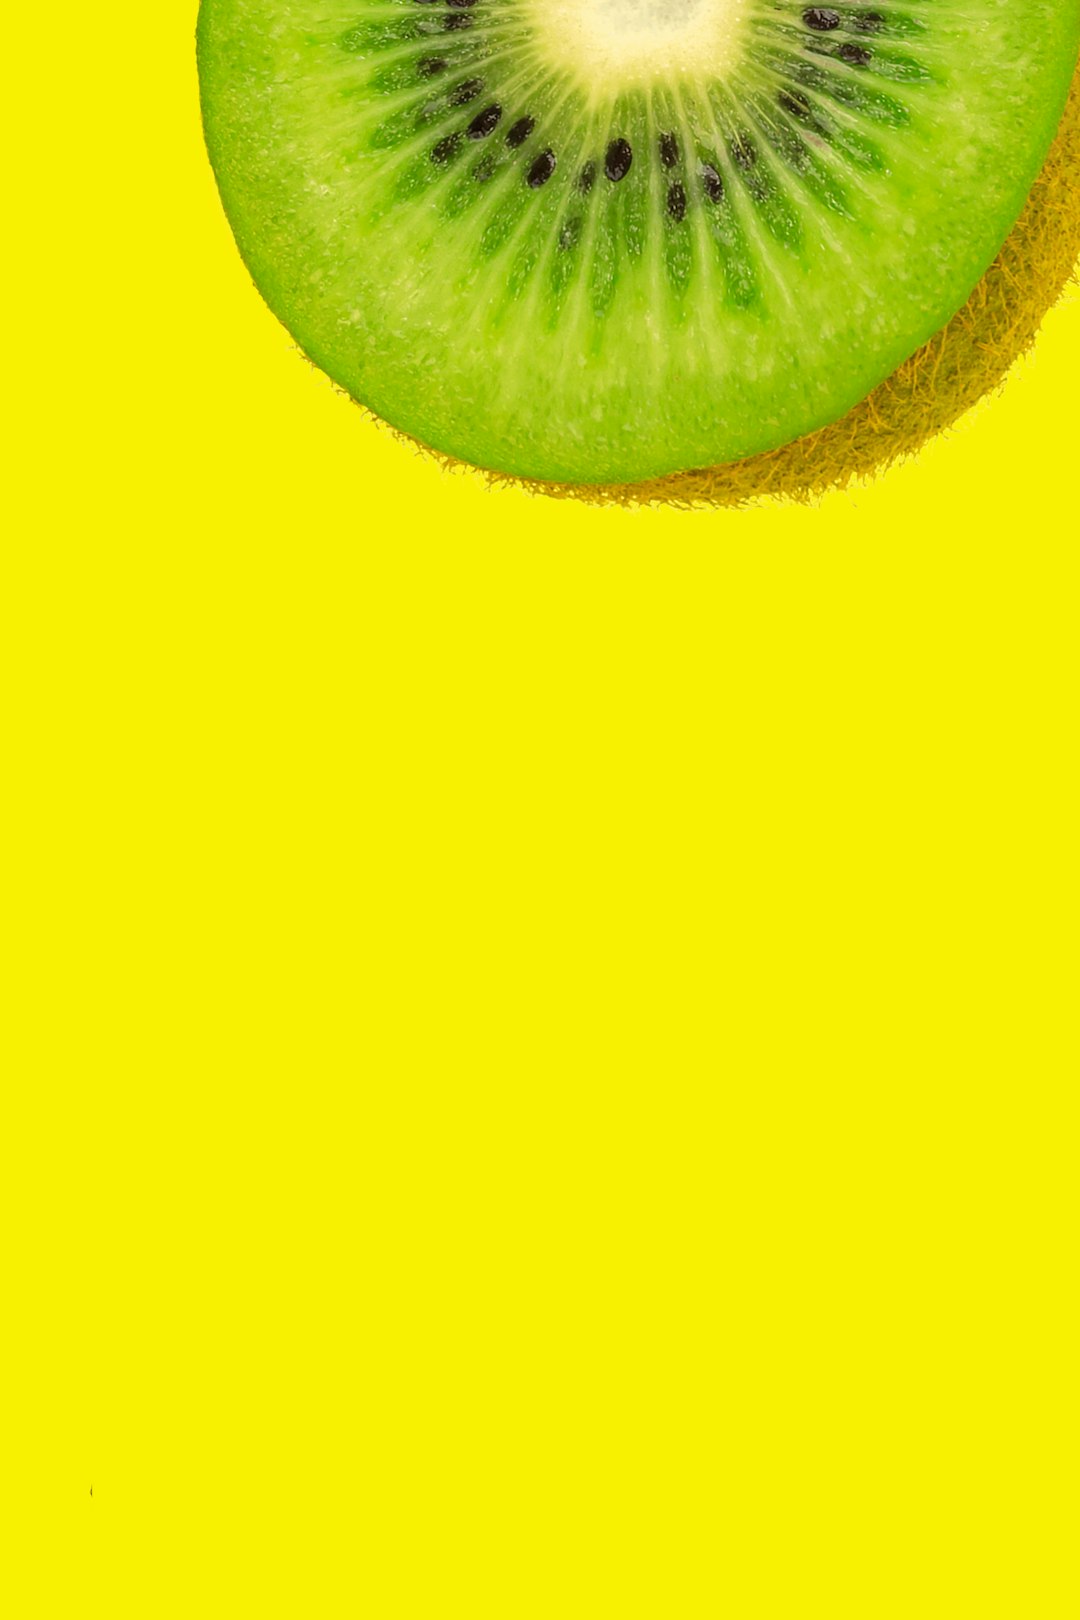 green and white sliced fruit